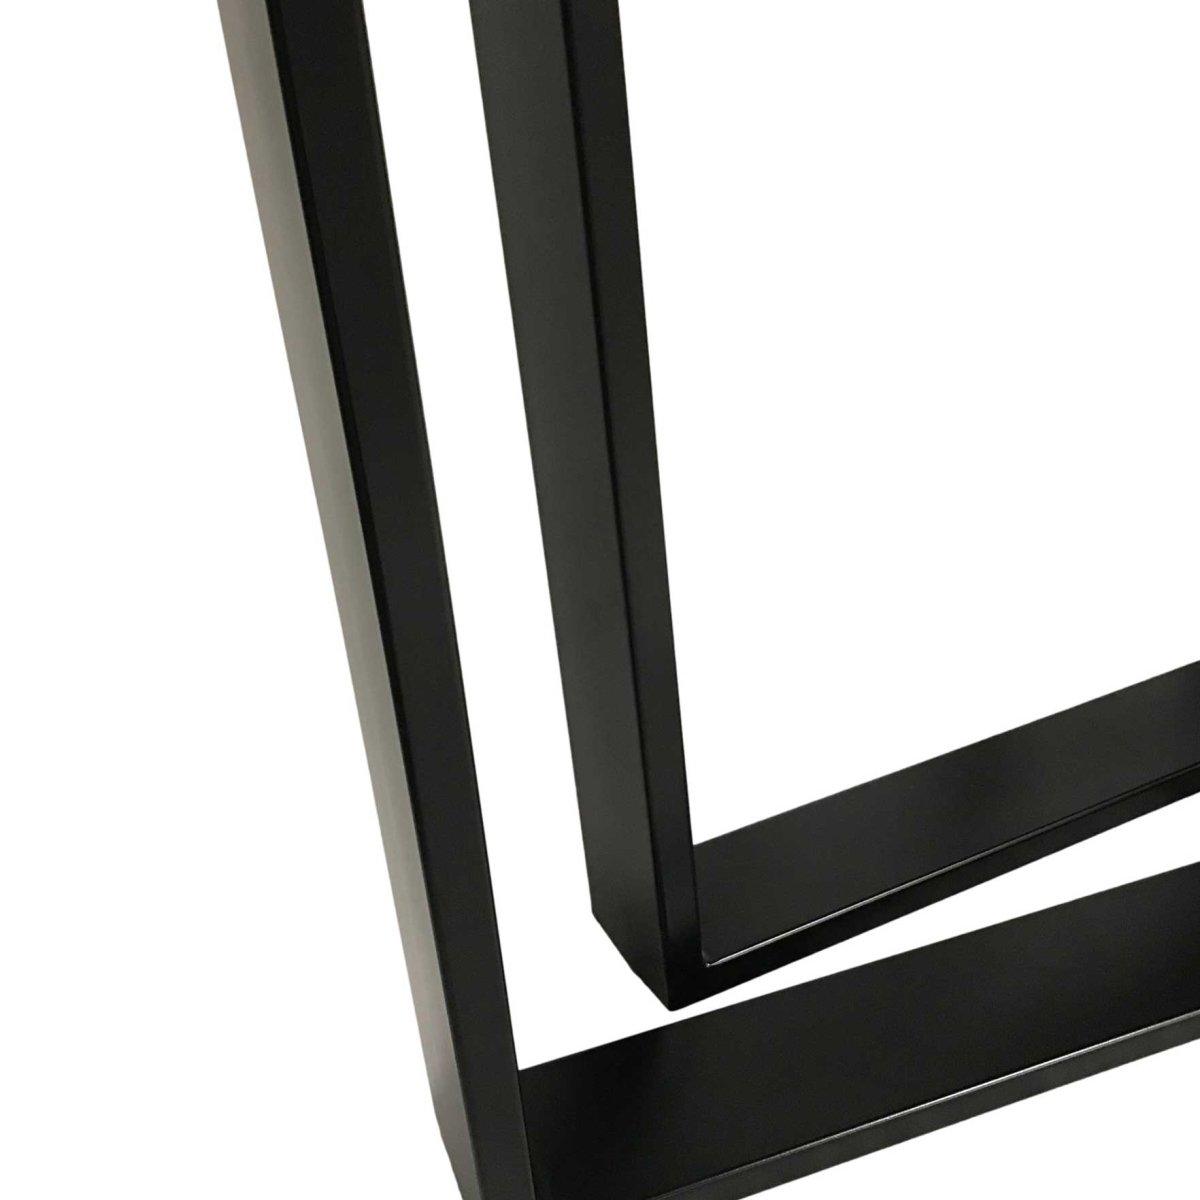 U-Style Industrial black metal table Legs (Set of 2) - Rustic Furniture Outlet